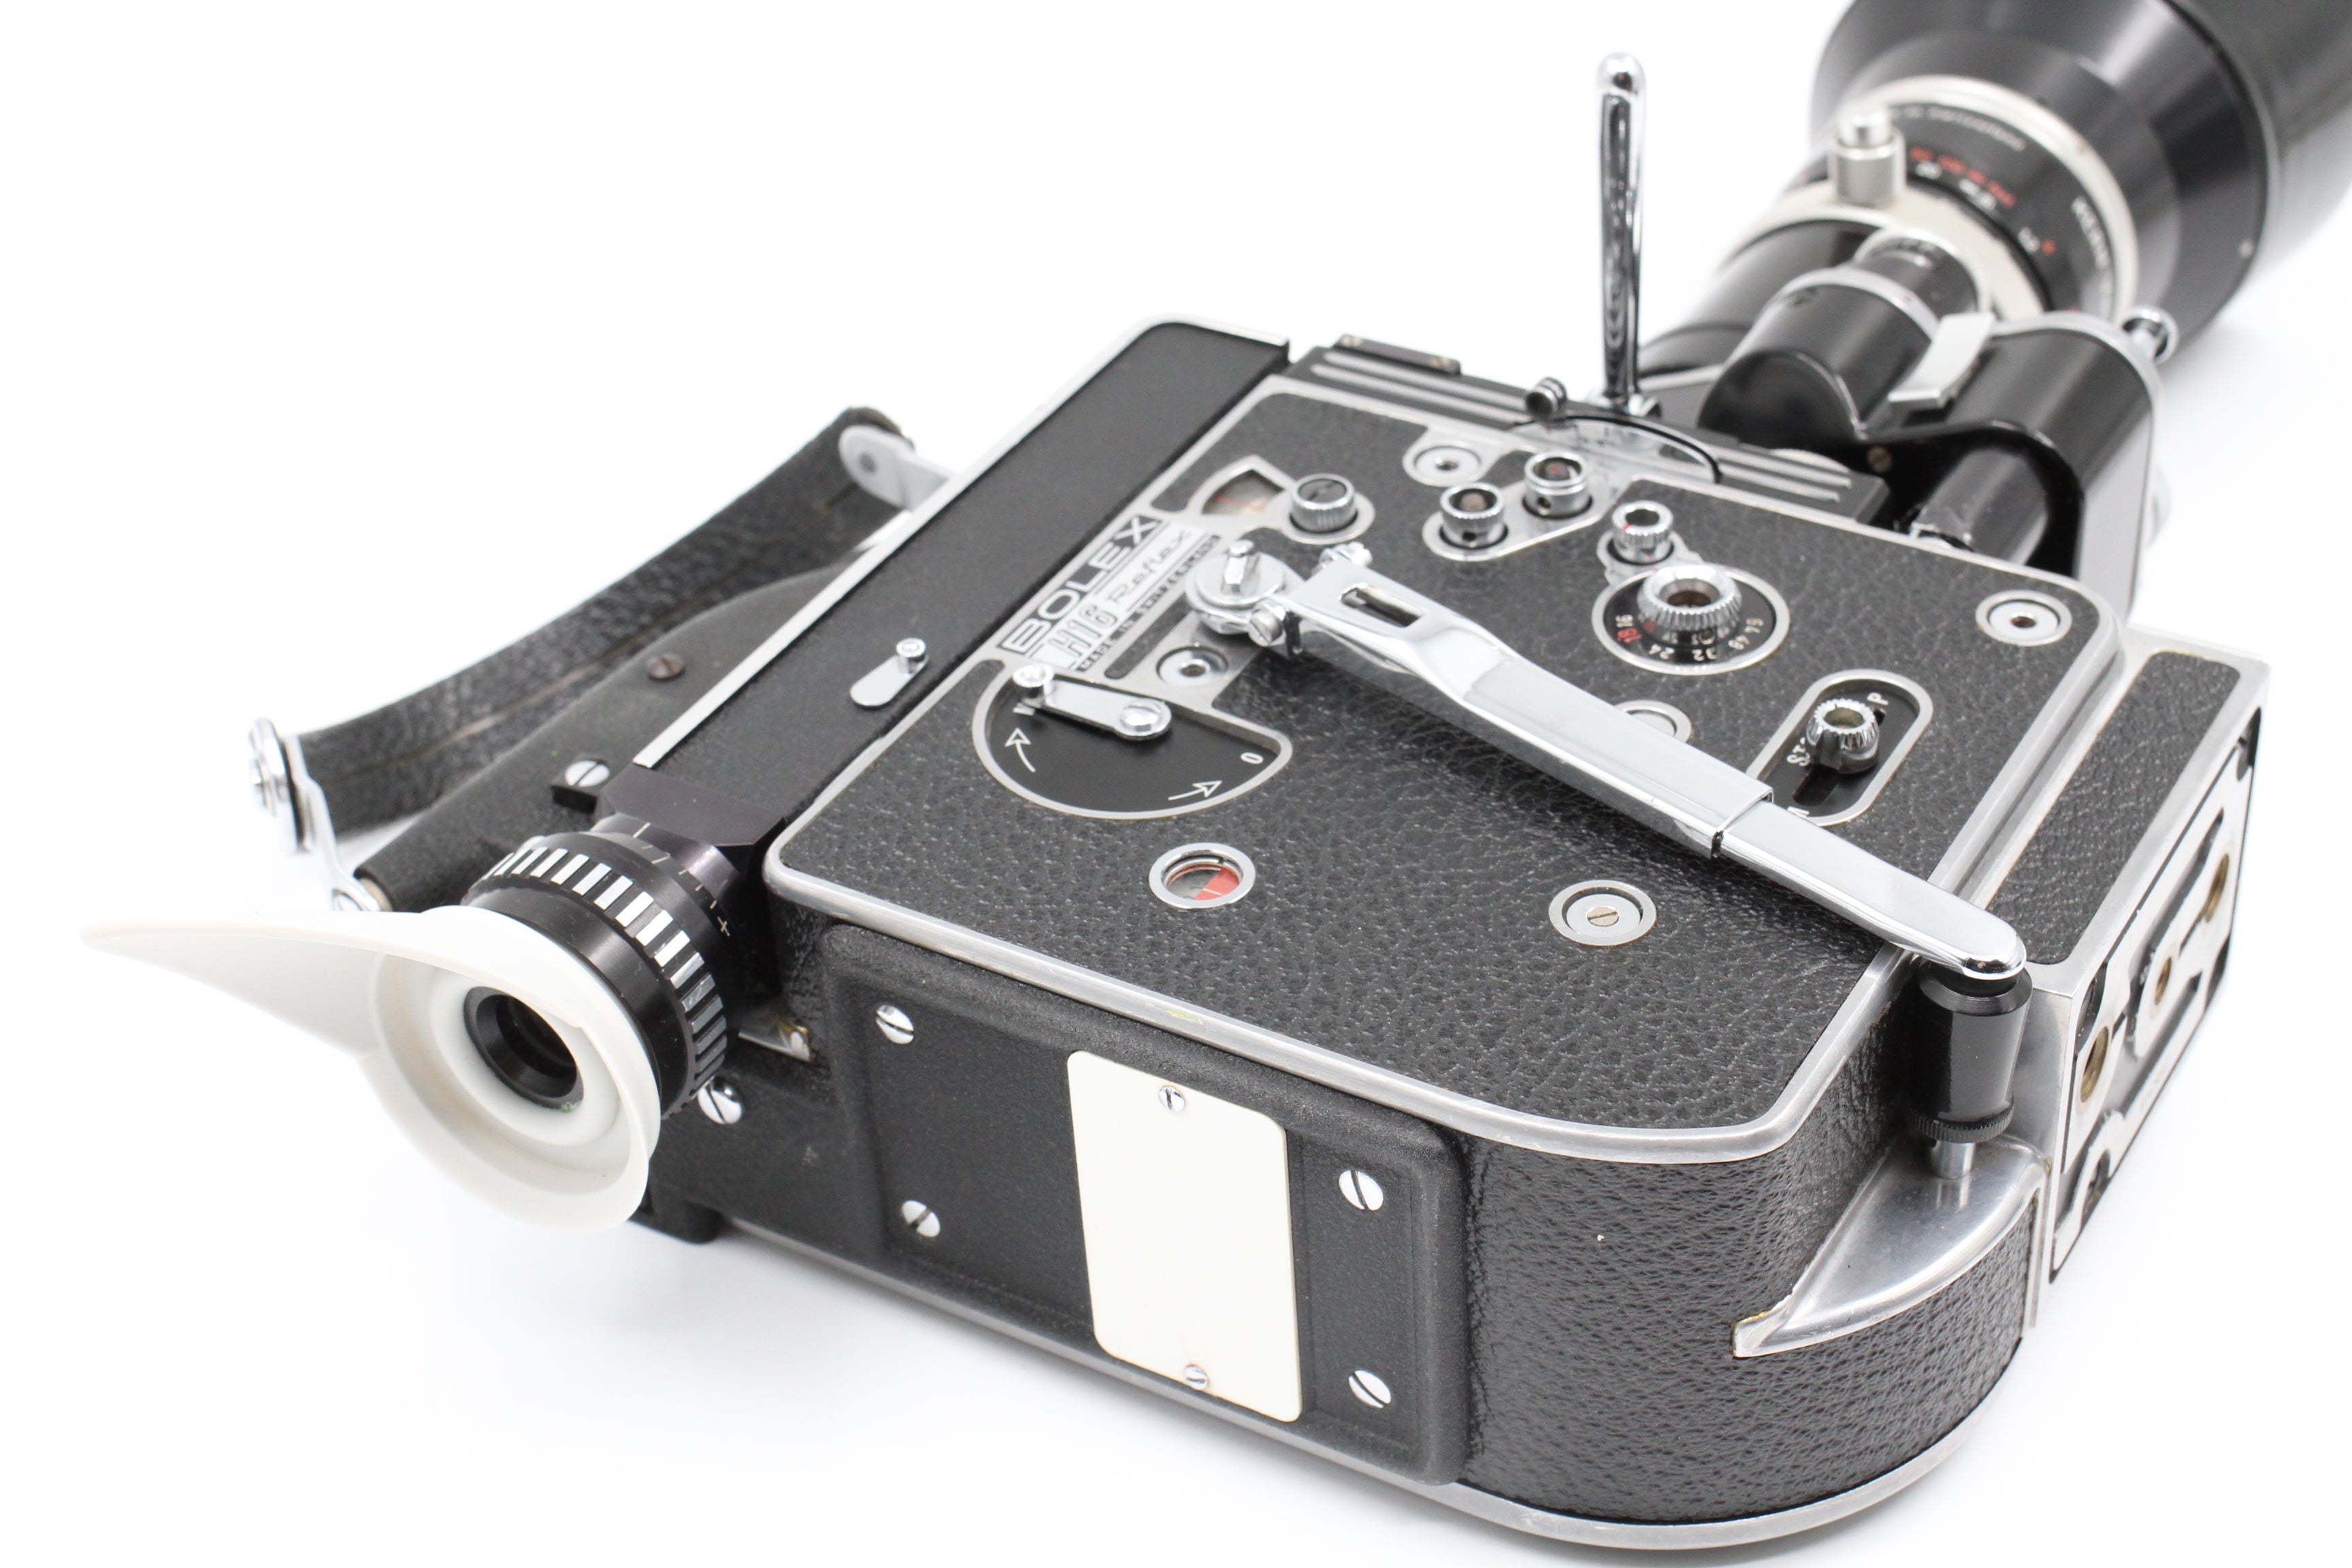 Bolex H16 REX 5 Reflex 16mm Cine Camera w/ Kern Vario-Switar 16-100mm f1.9, SERVICED.